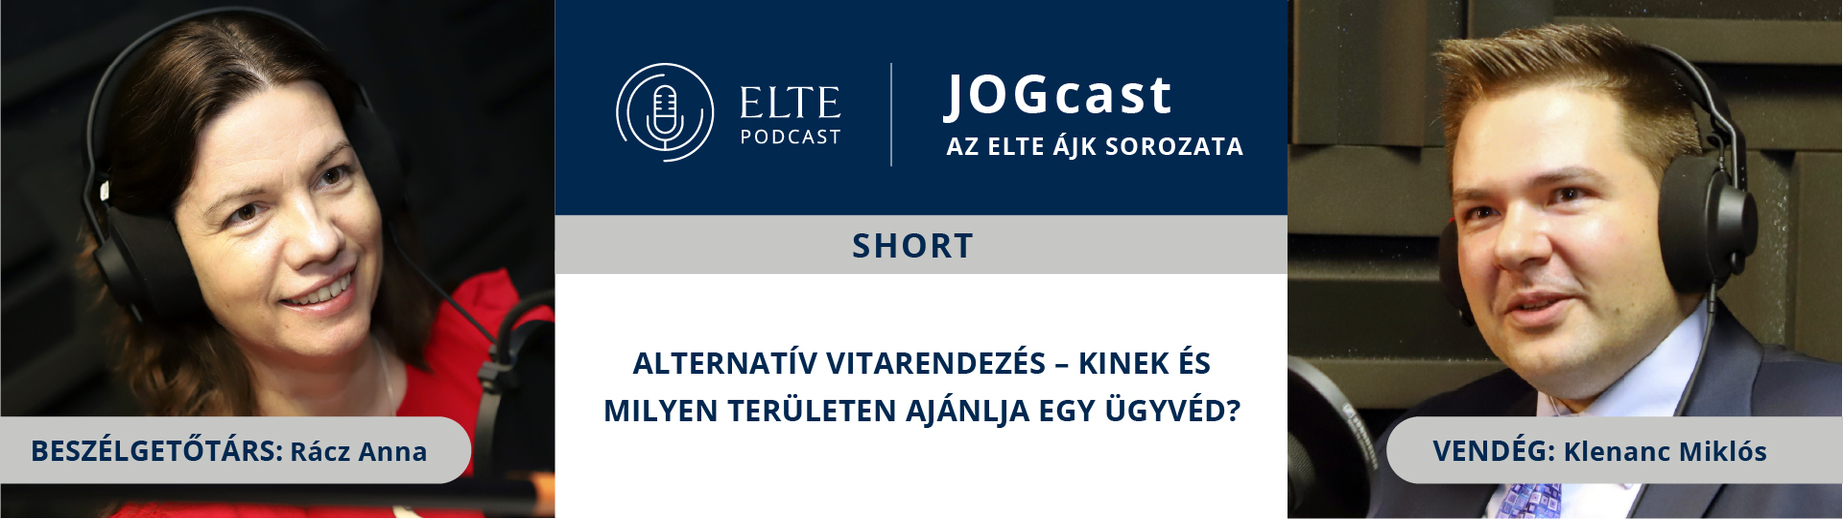 jogcast